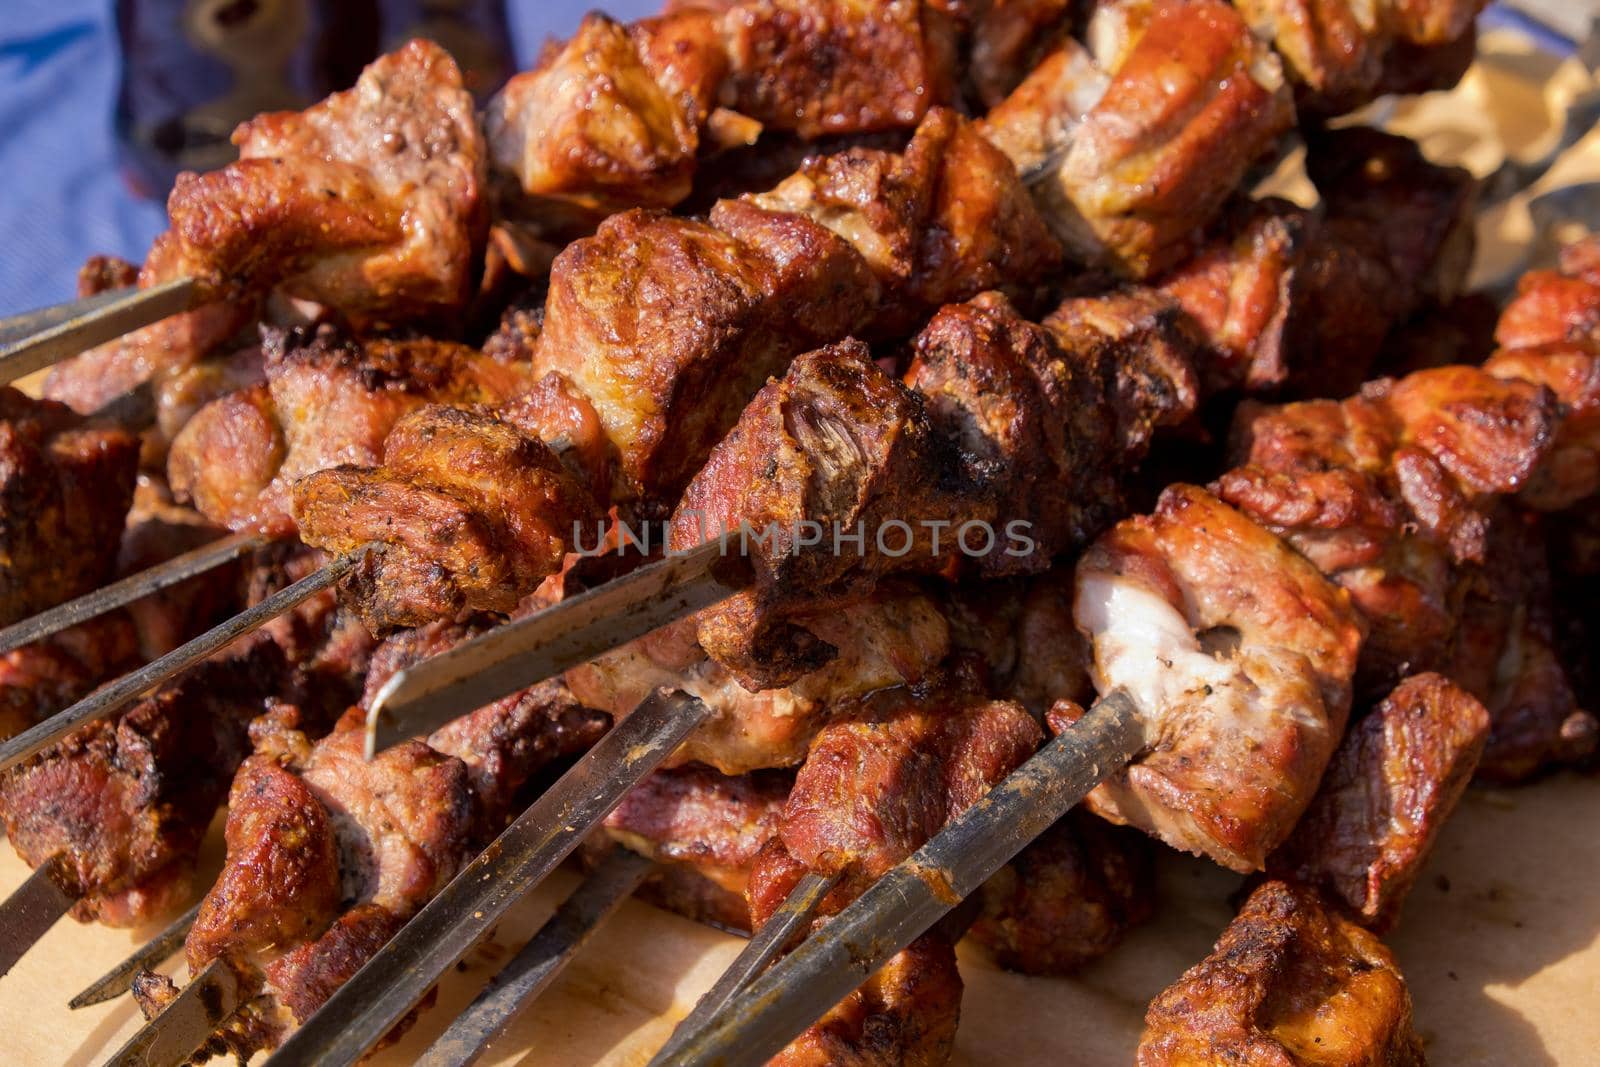 Fried kebab on skewers. Street food festival. Close-up. Selective focus. by leonik